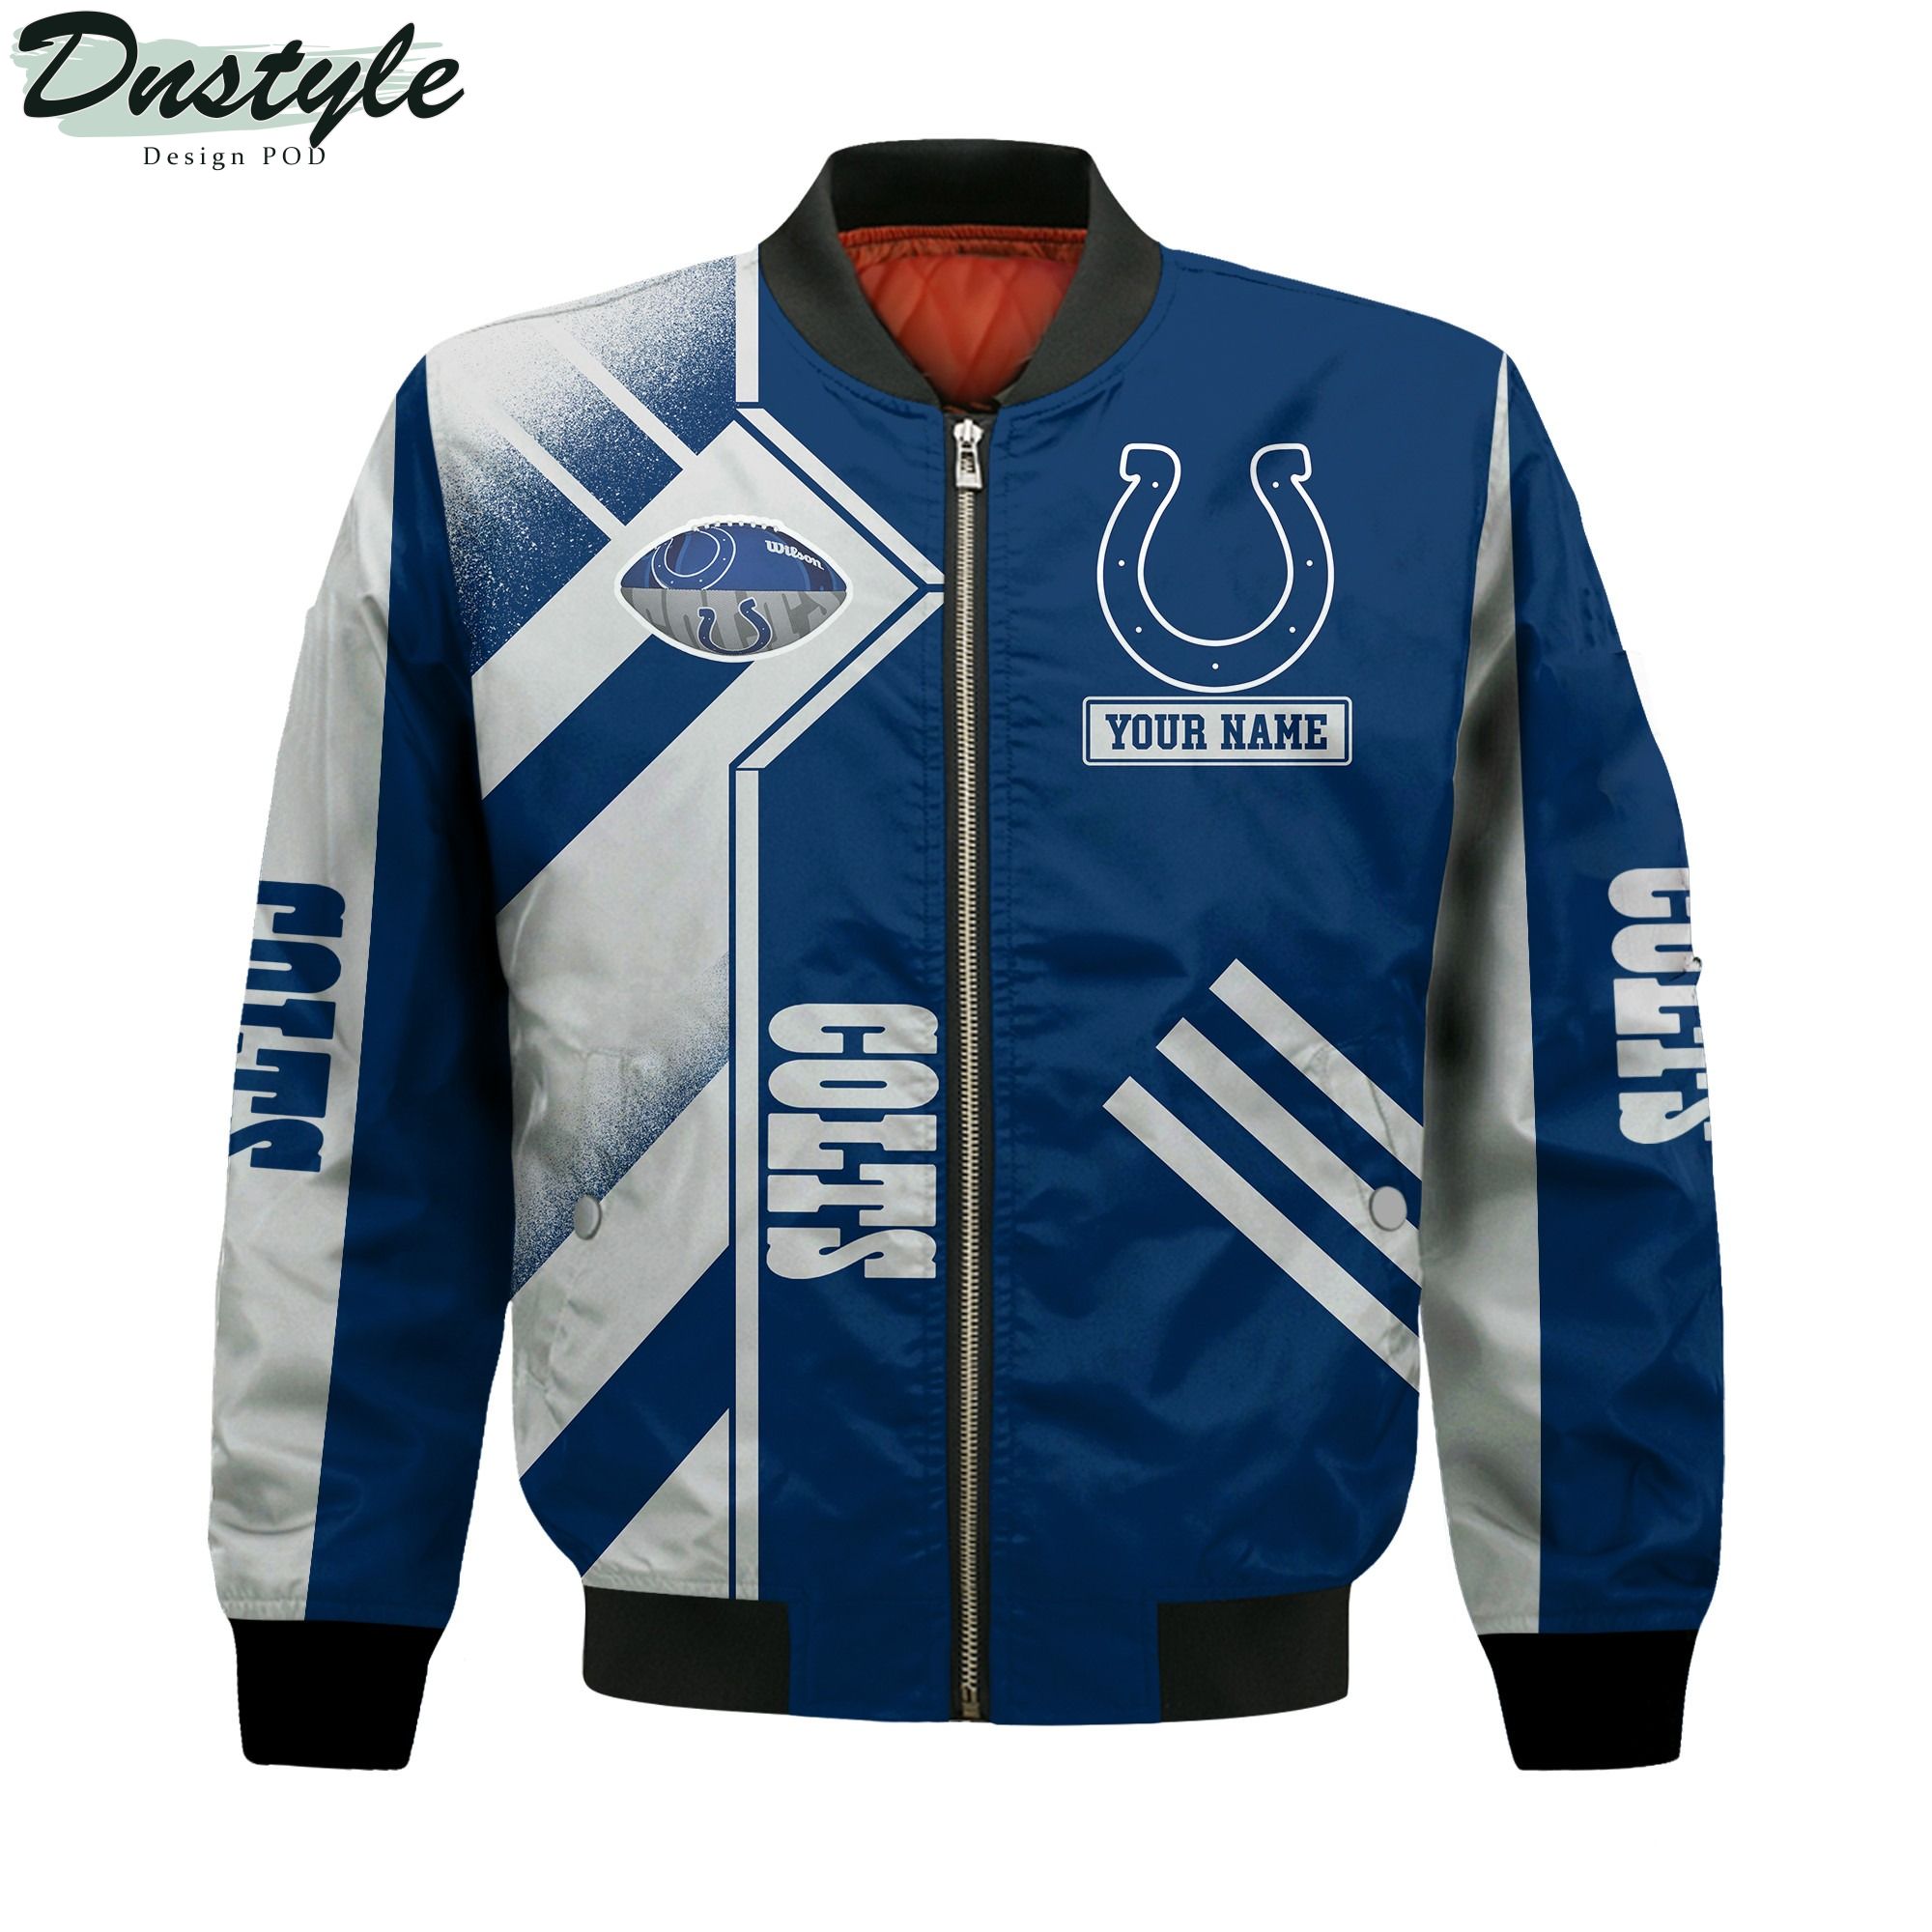 Indianapolis Colts NFL 2X Super Bowl Champions Custom Name Bomber Jacket